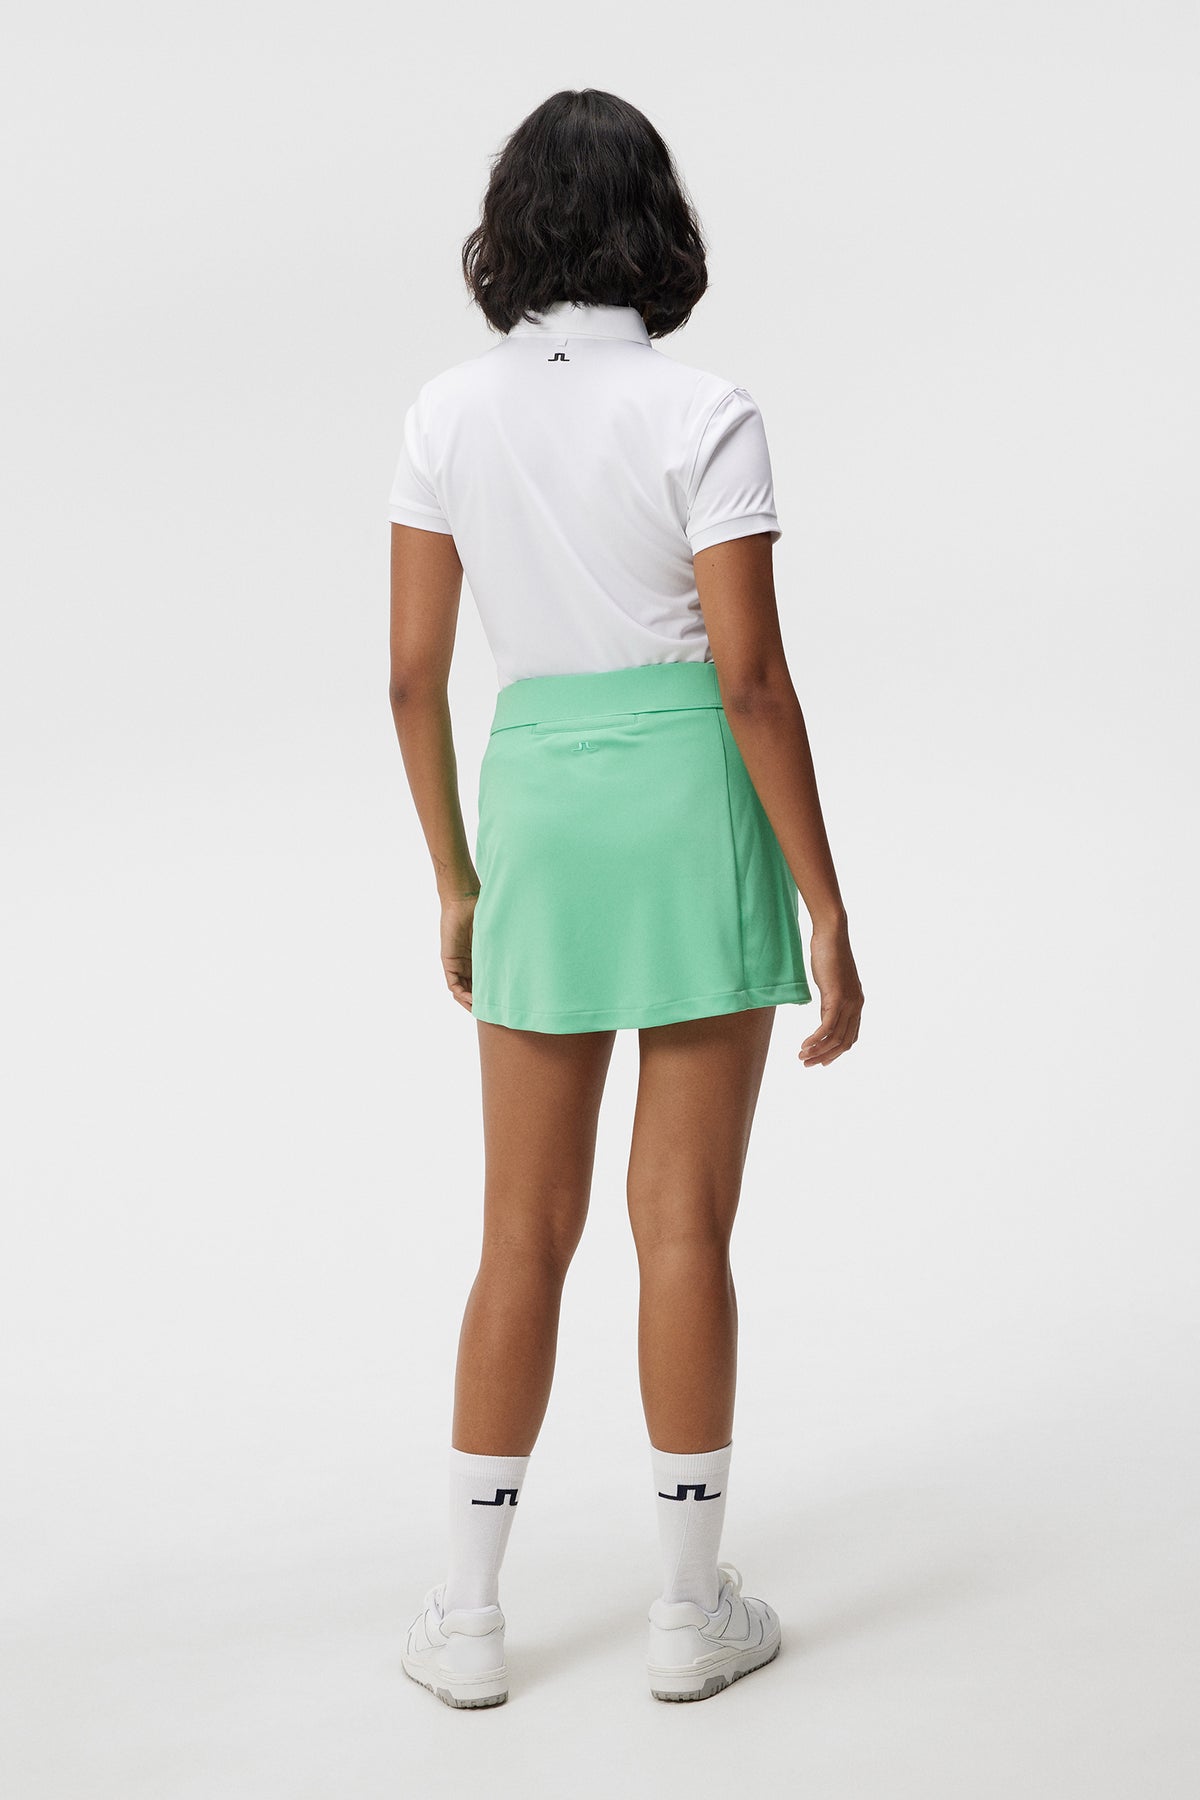 Amelie Skirt / Jade Cream